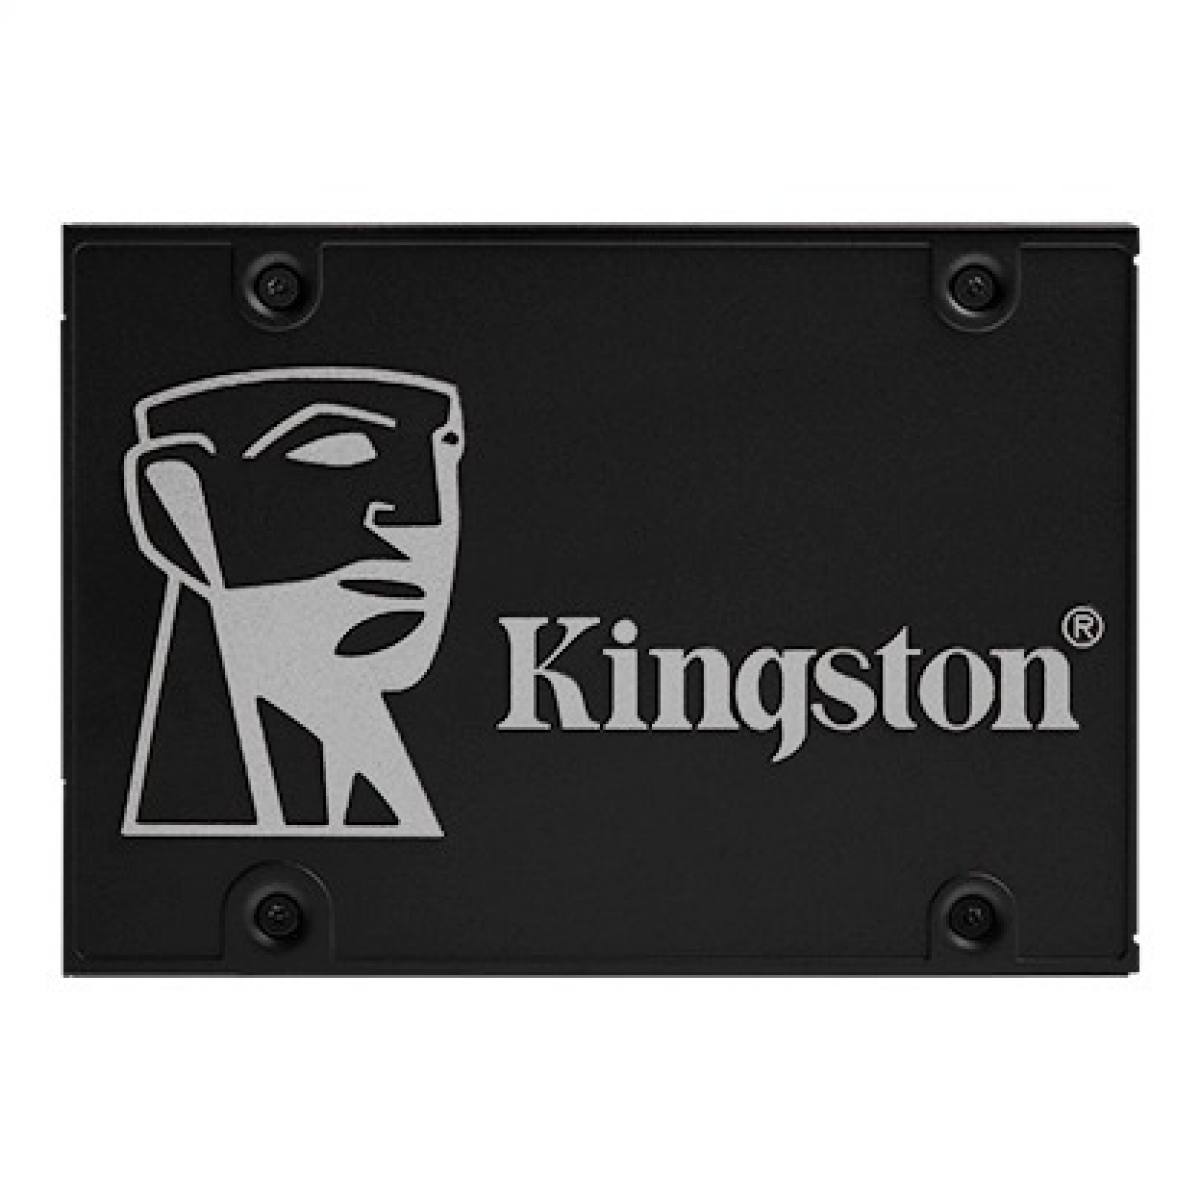 SSD Kingston SKC600 512GB SATA